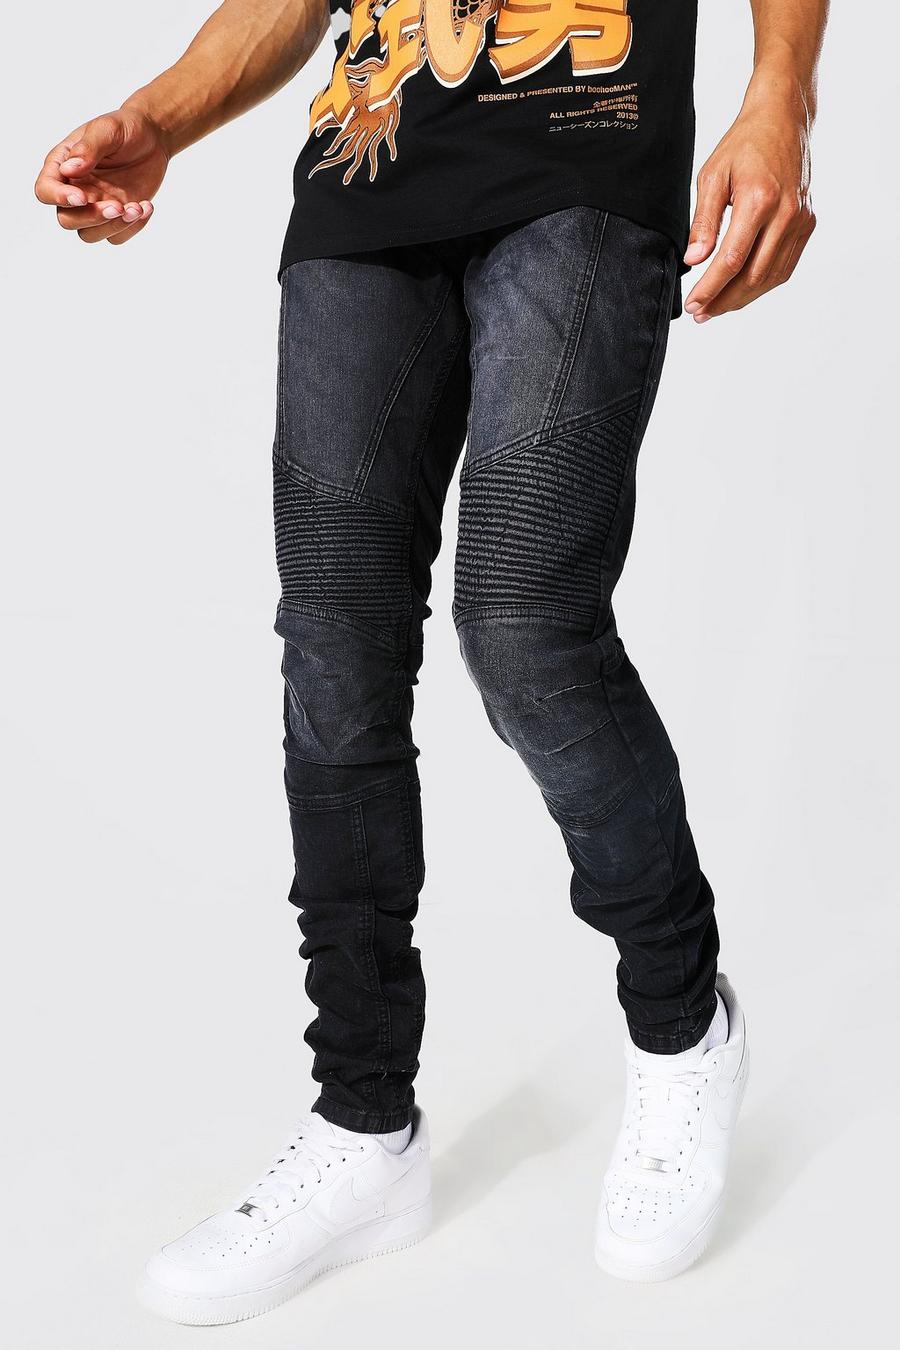 Jeans Tall stile motociclista Skinny Fit, Black nero